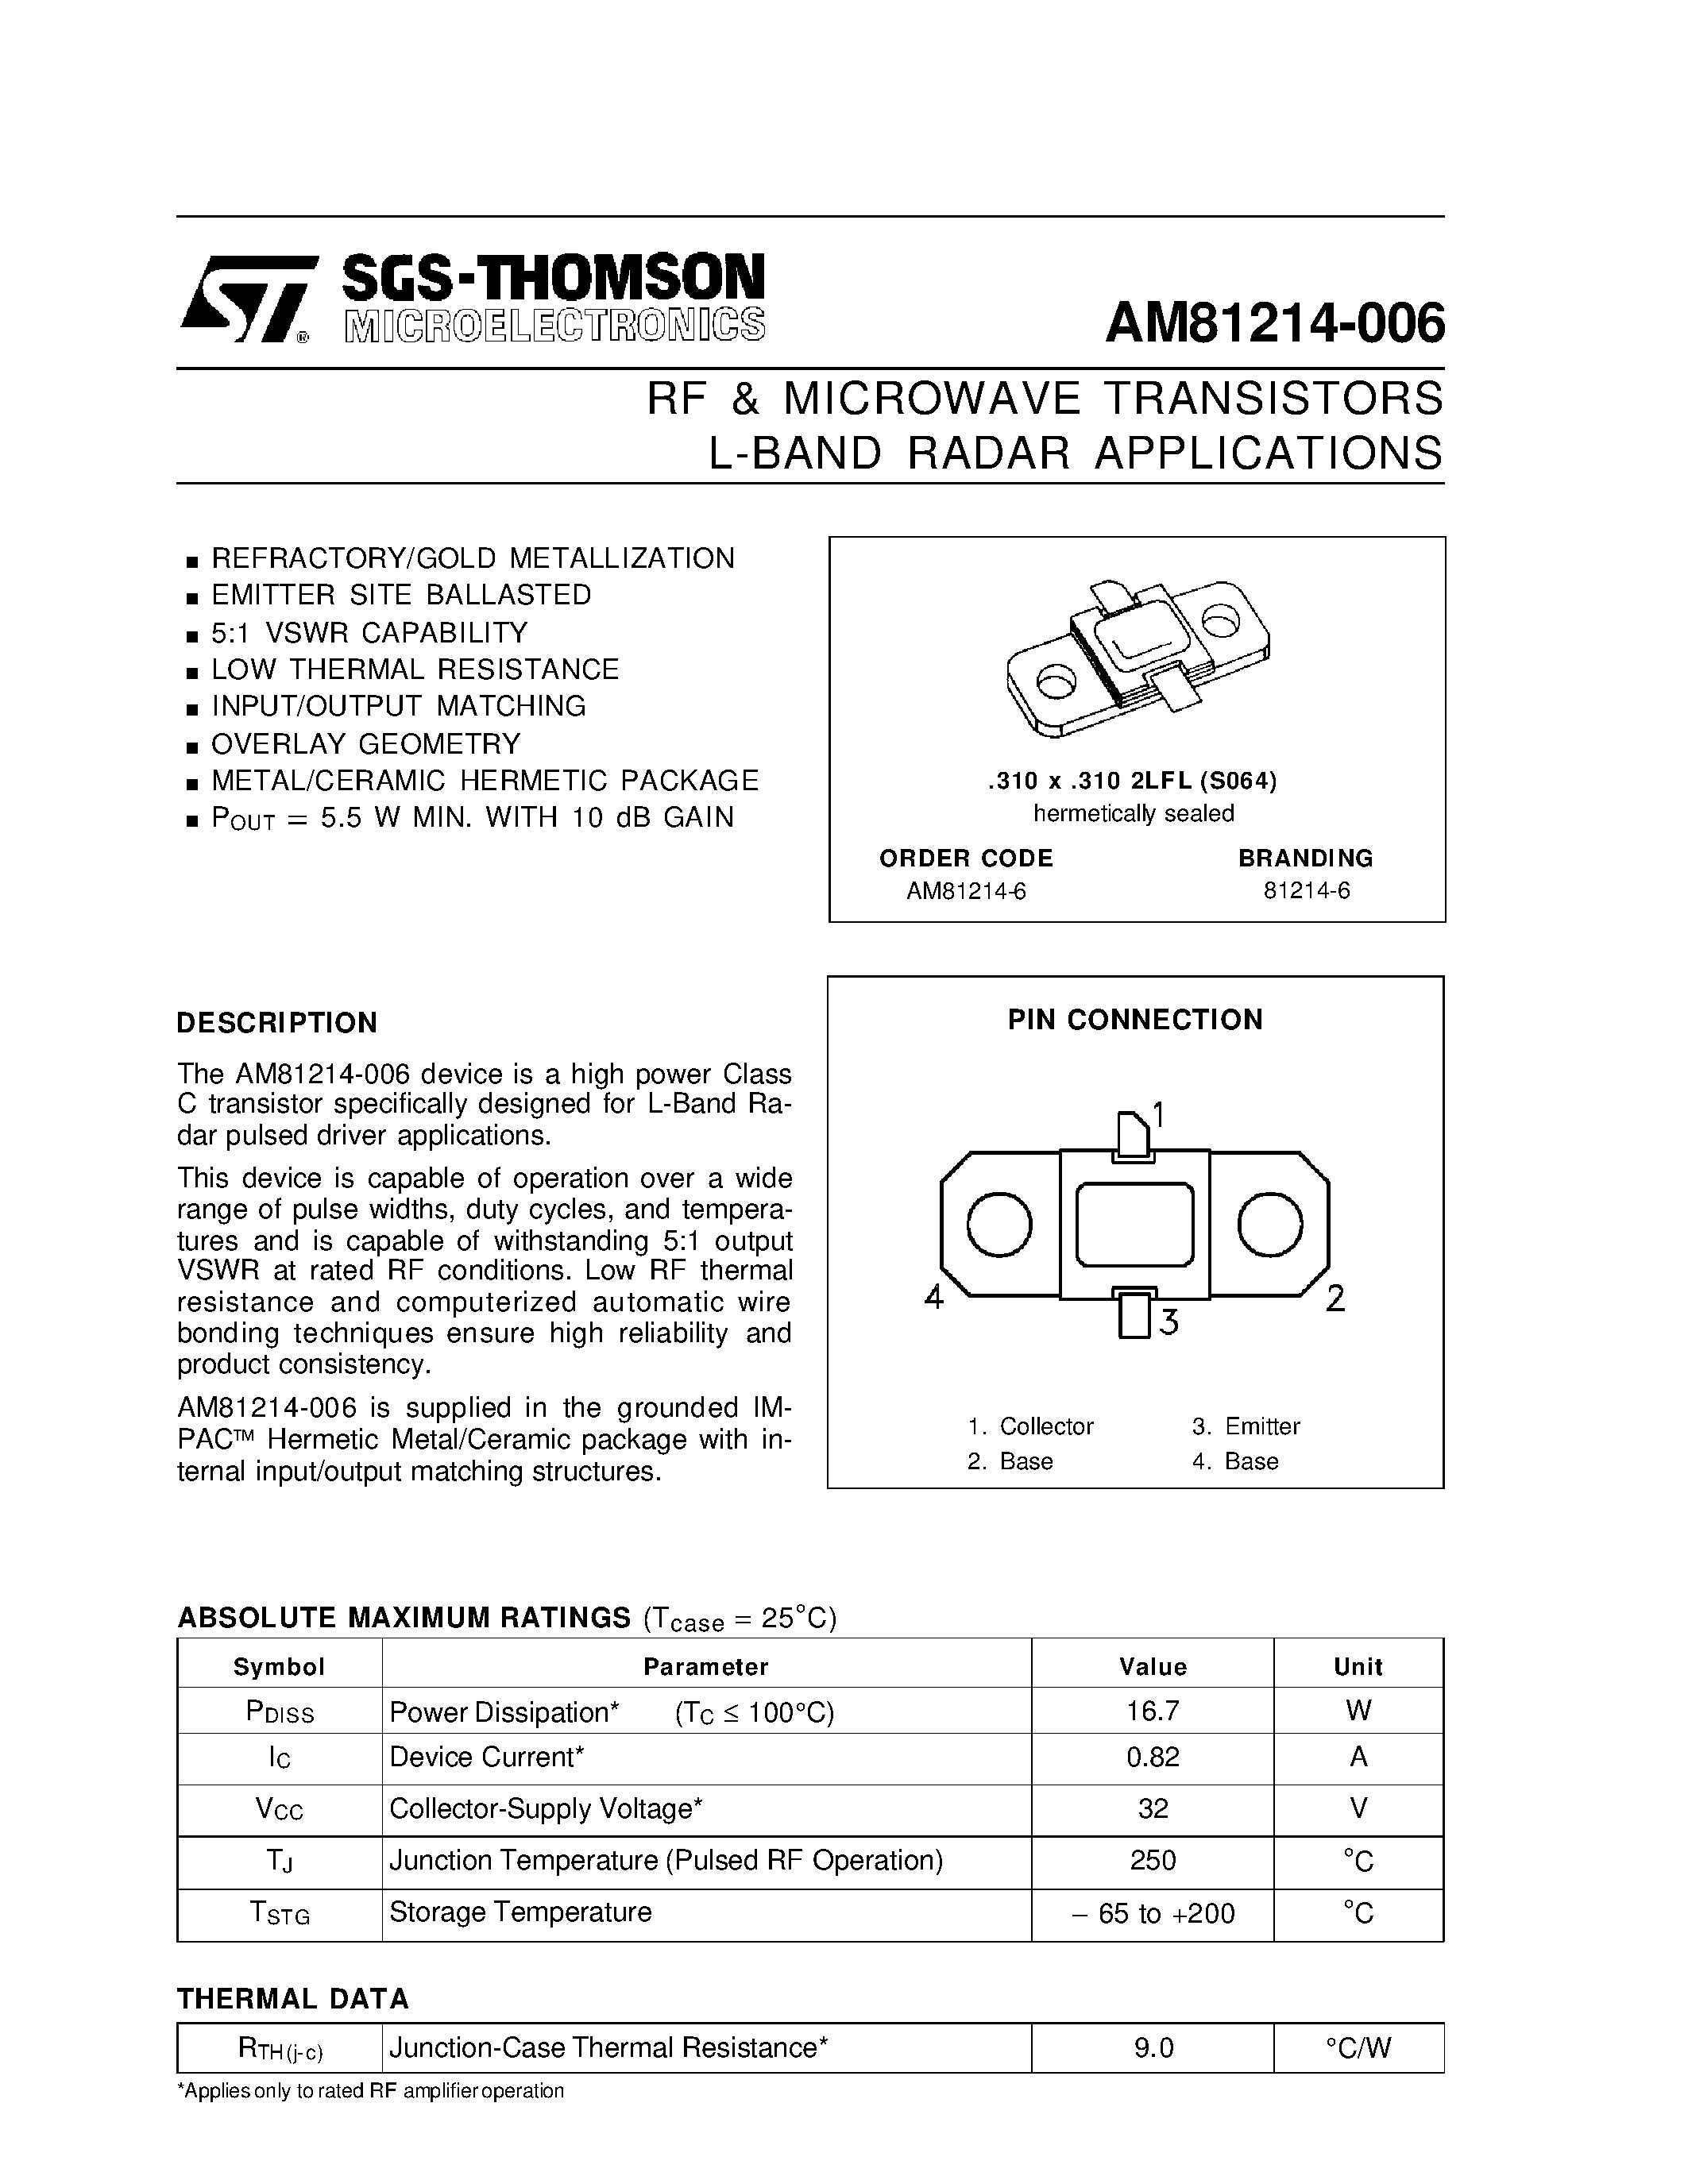 Datasheet AM81214-006 - RF & MICROWAVE TRANSISTORS L-BAND RADAR APPLICATIONS page 1